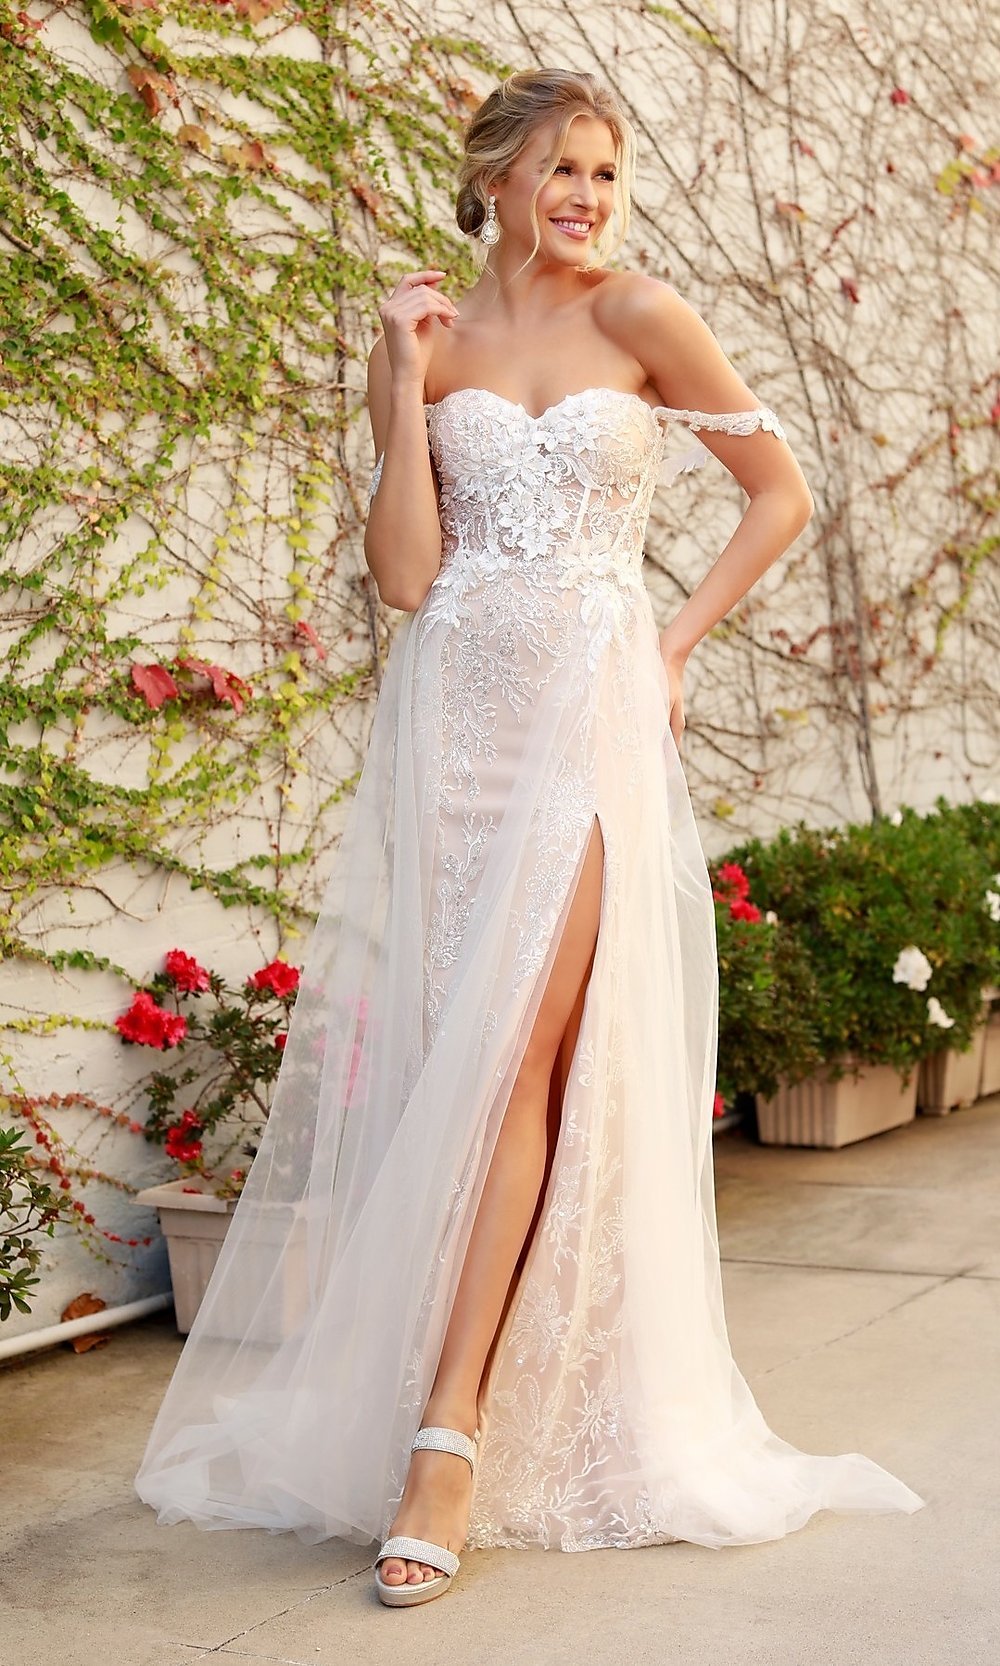 Embellished White Lace Long Prom Dress - PromGirl